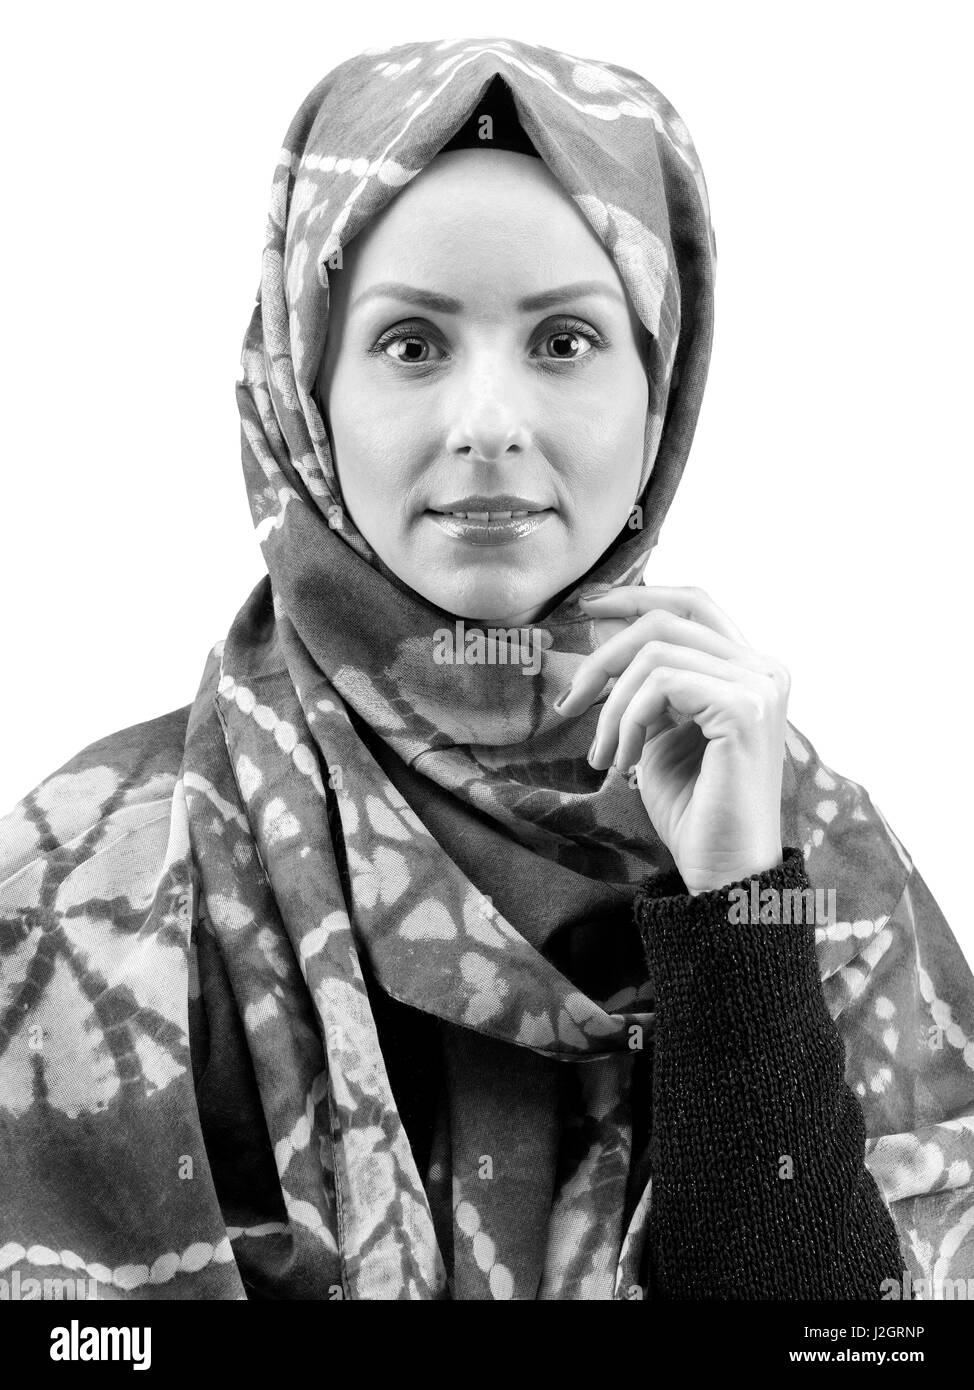 Editors PNG Image, Hijab Editor Png Download Edit Transparent, Hijab Girl,  Cute Hijab, Child PNG Image For Free Download